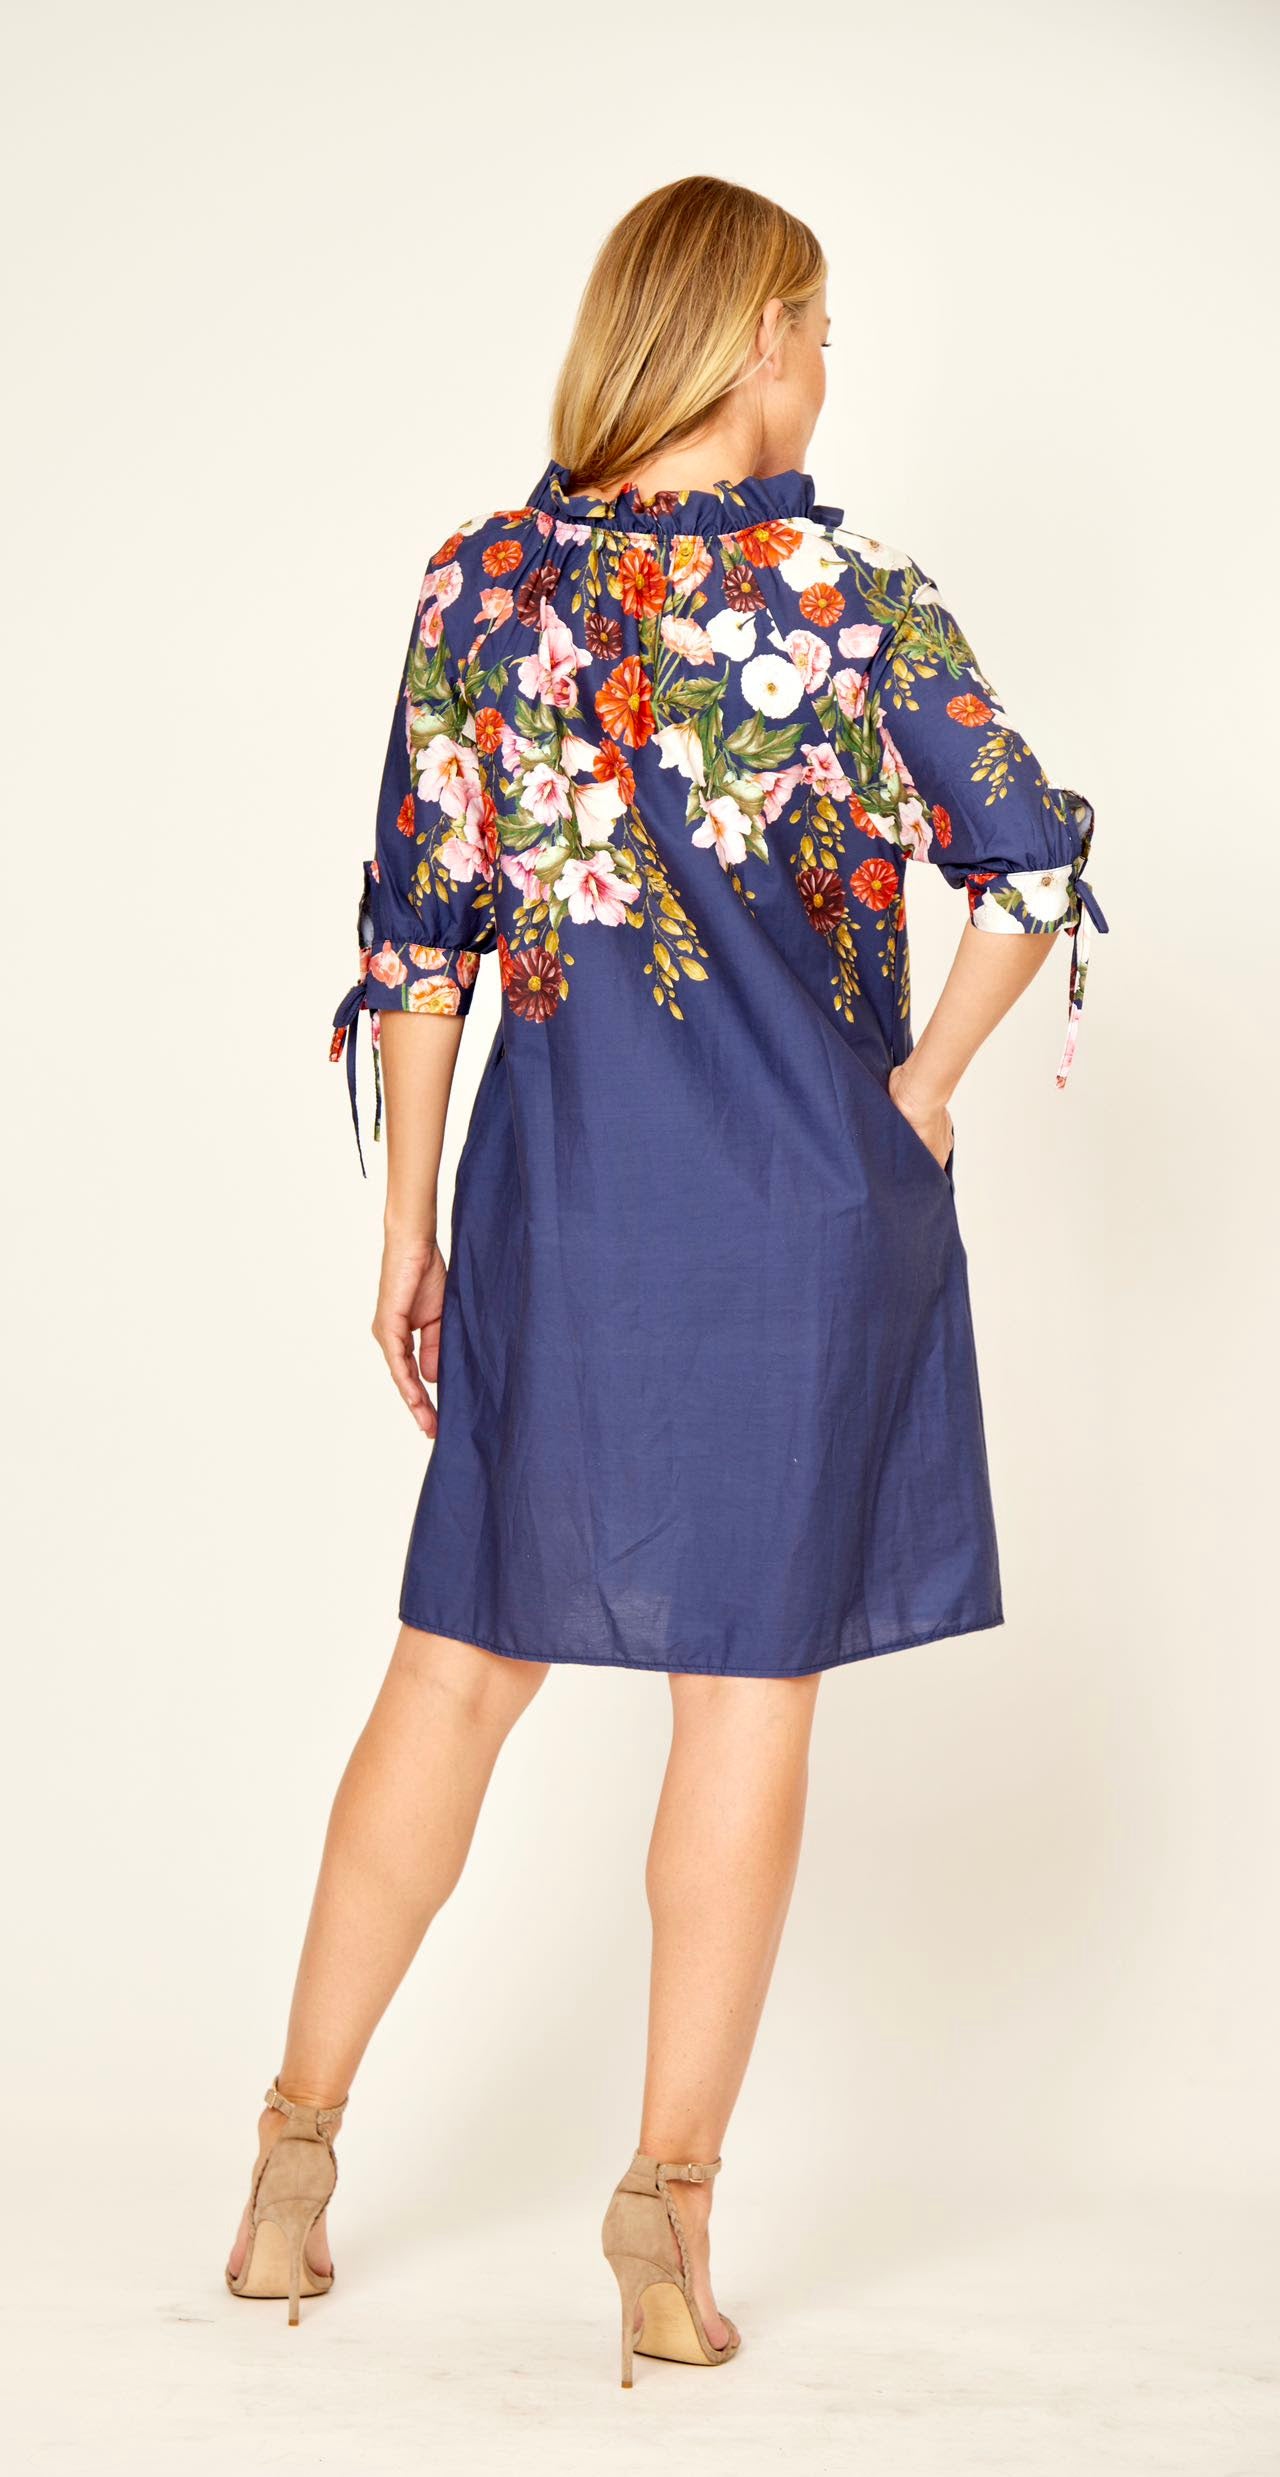 La Strada Navy/Floral Print Cotton Dress